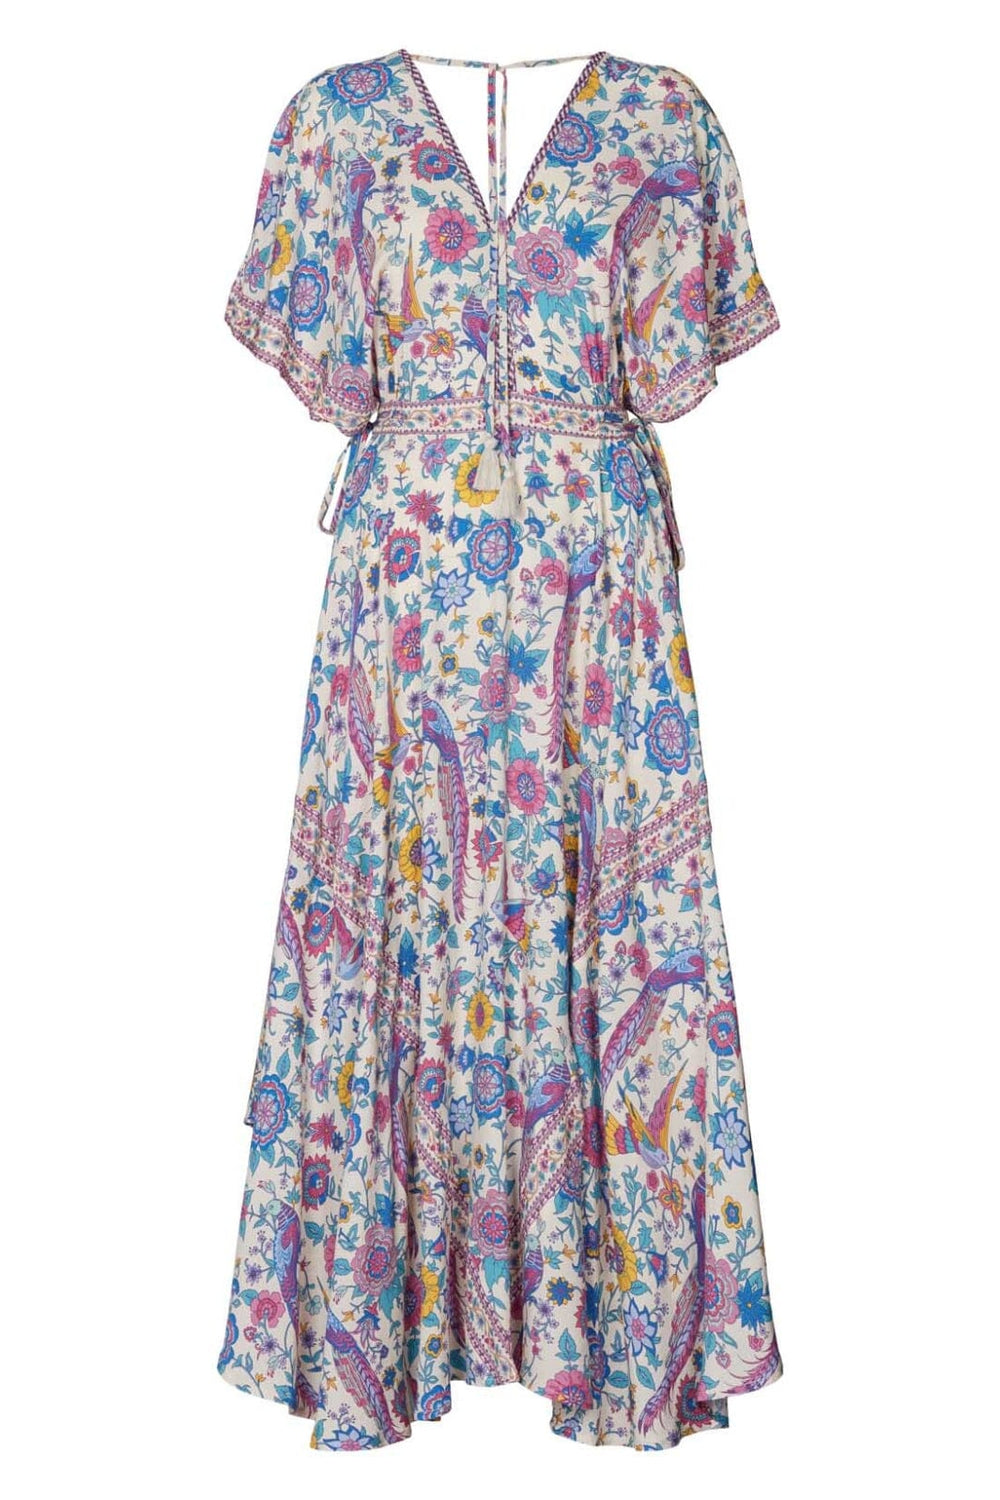 Lollys Laundry - Nightingale Dress - 70 Multi Kjoler 